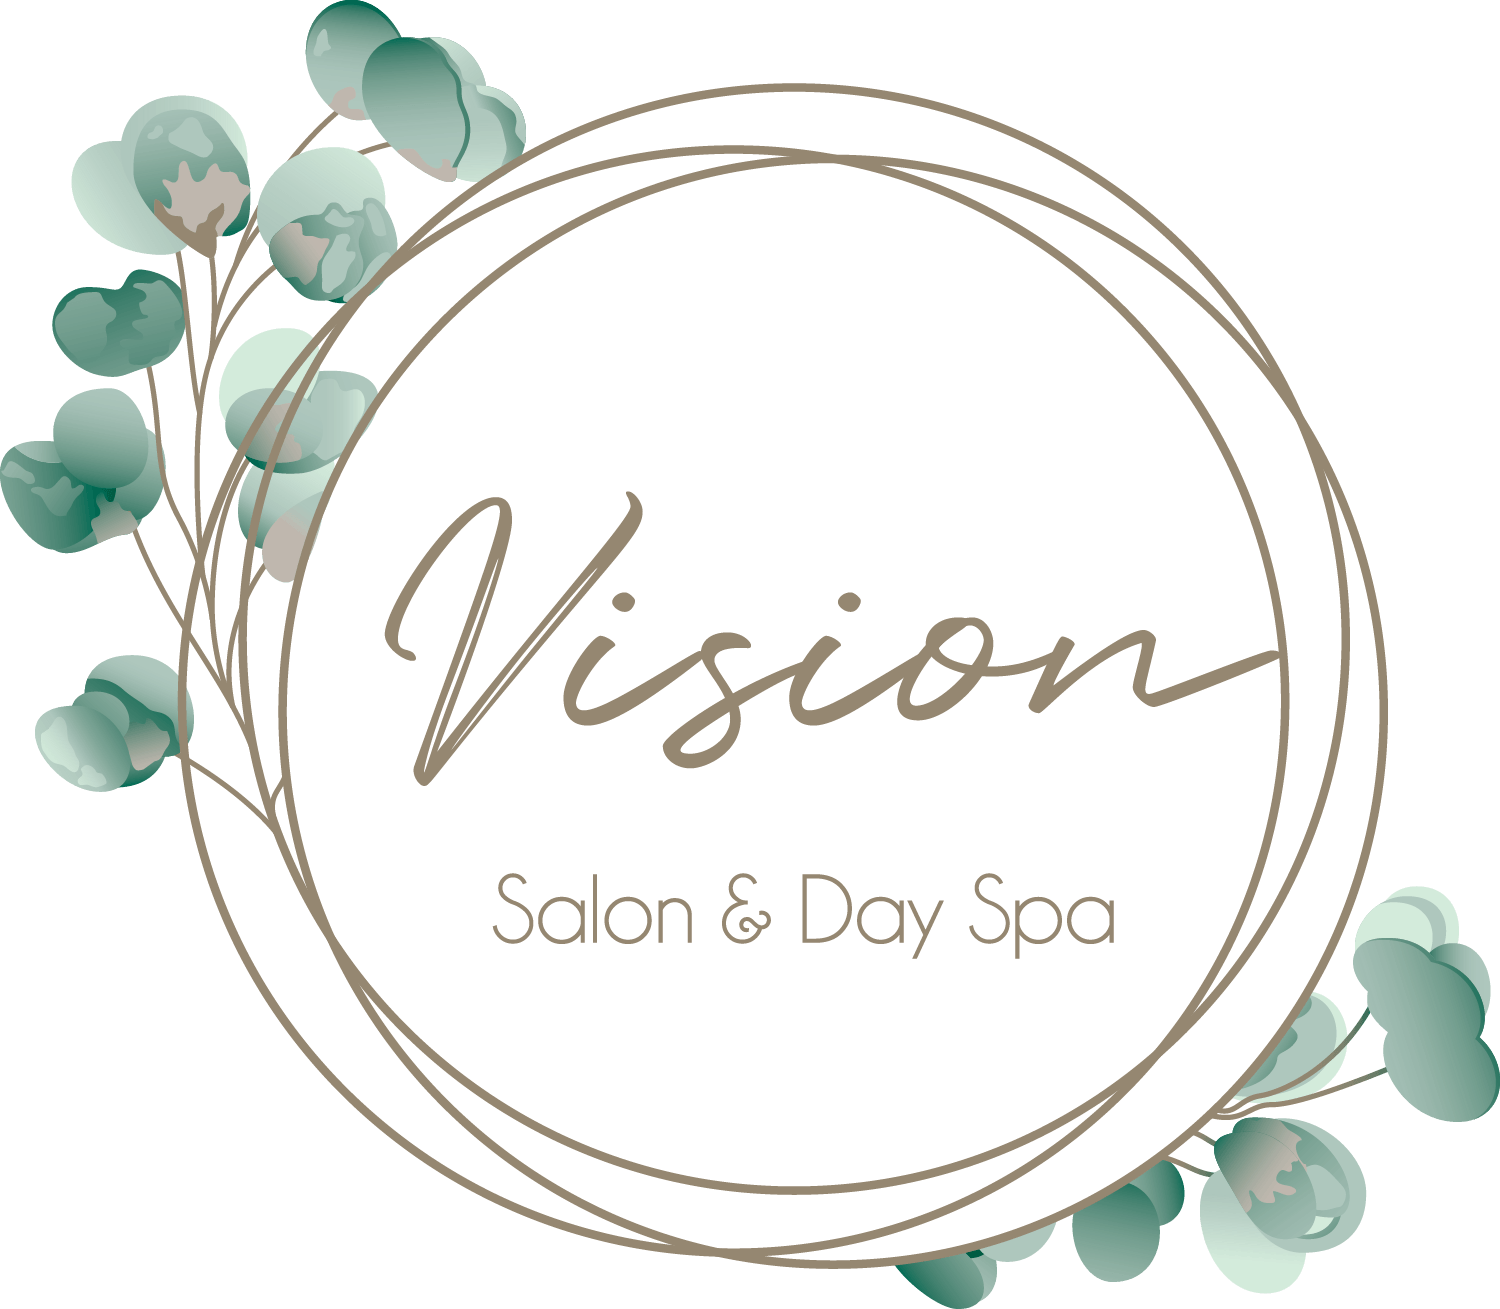 VISIONS SALON & DAY SPA - NAVIATION LOGO